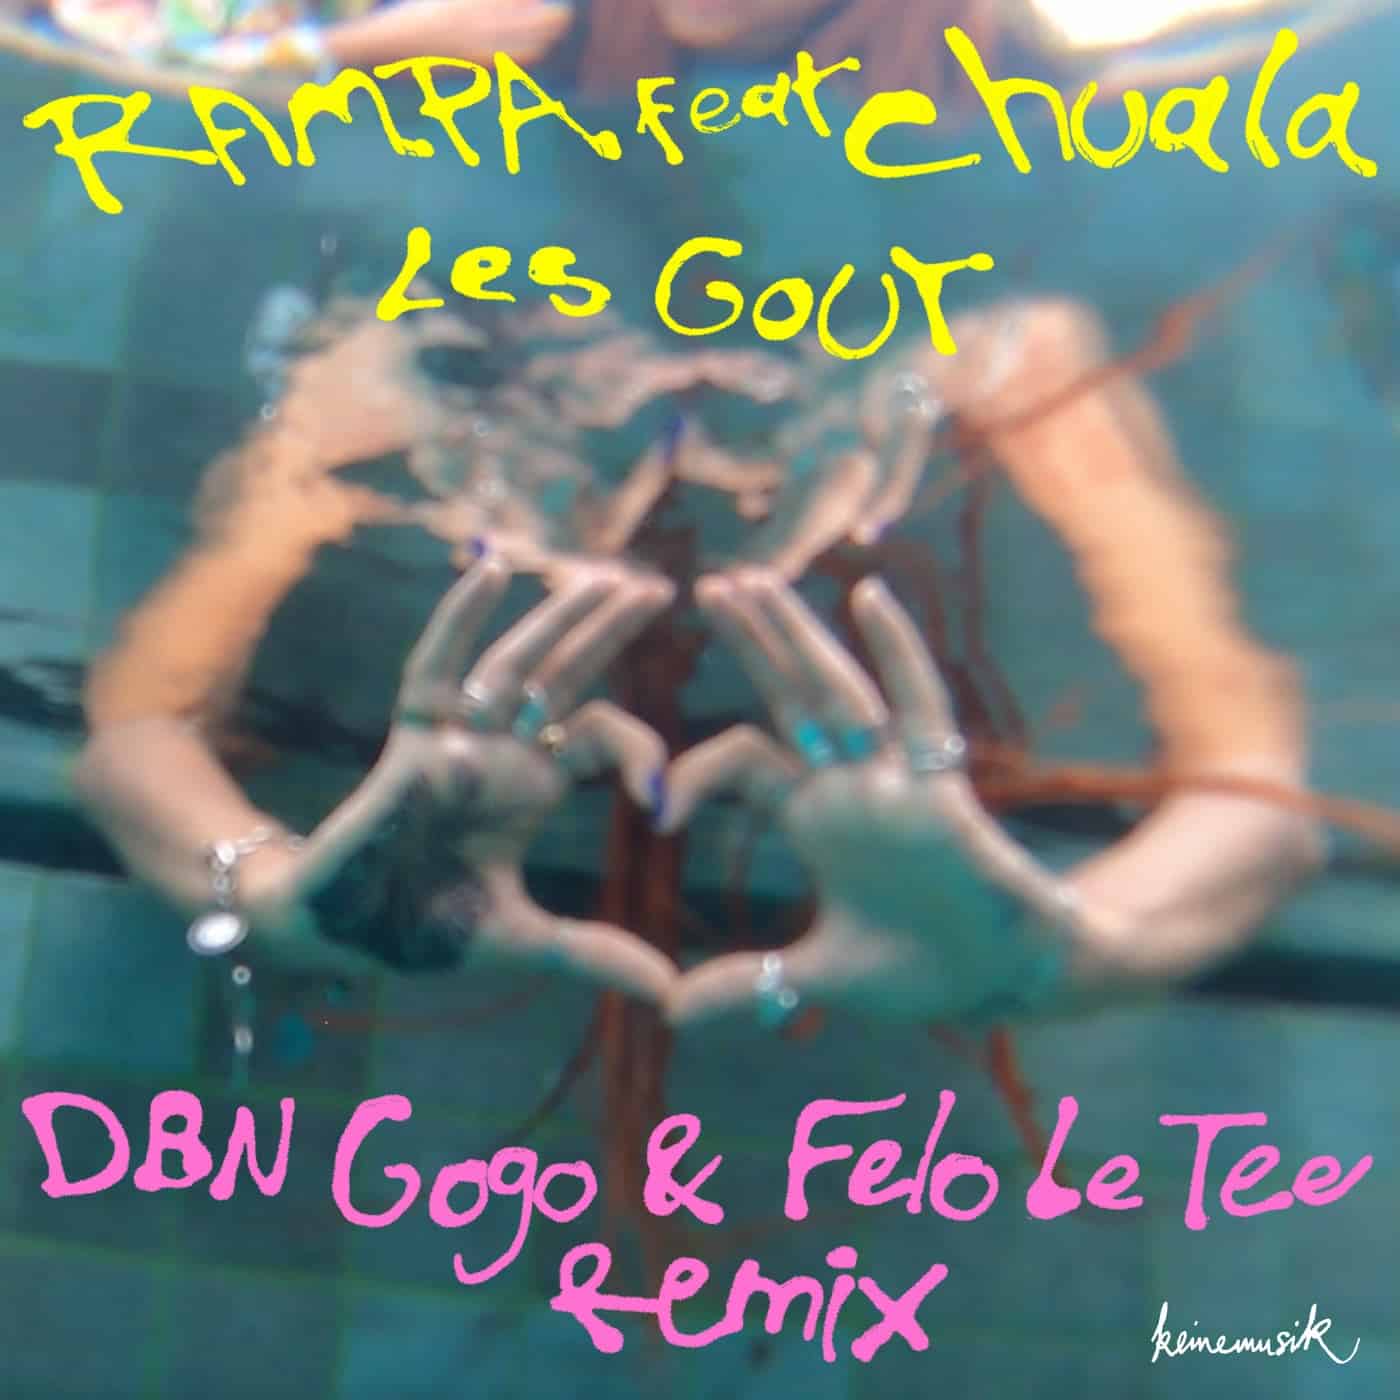 Download Rampa, chuala - Les Gout on Electrobuzz